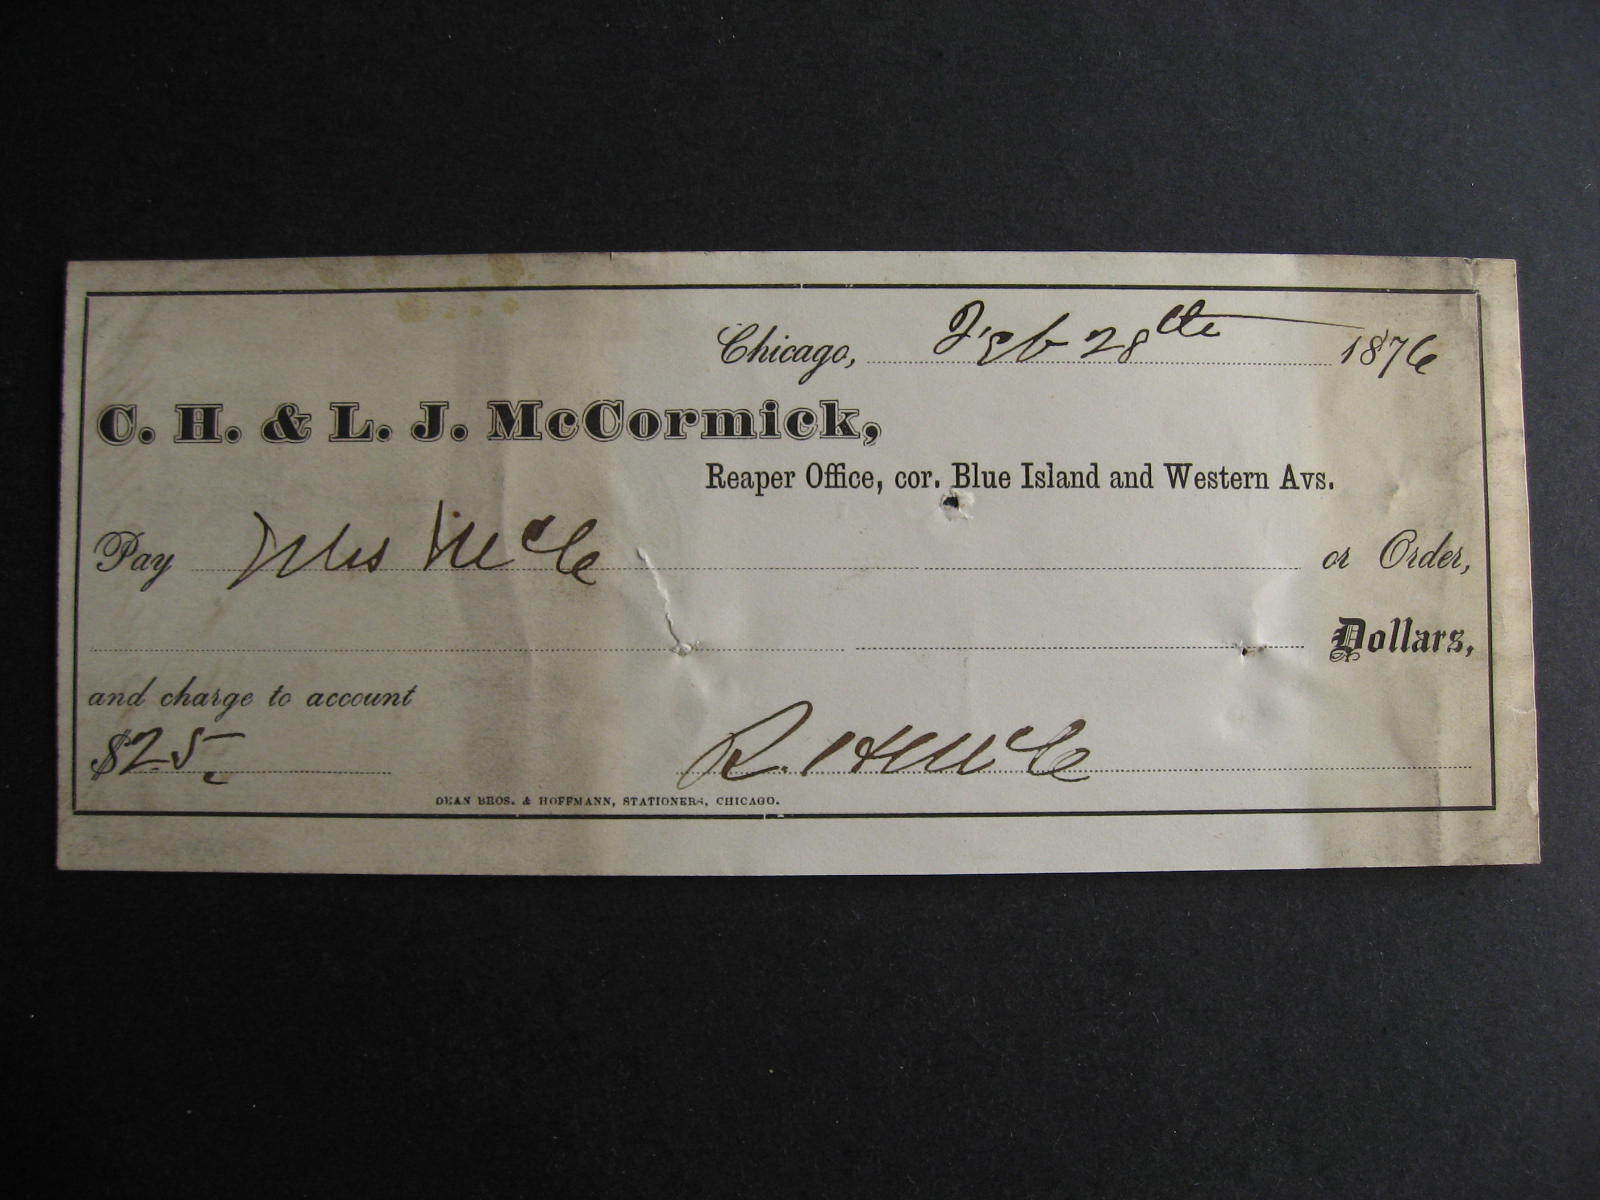 Check signed by financier Robert Hall McCormick Feb 28 1876 